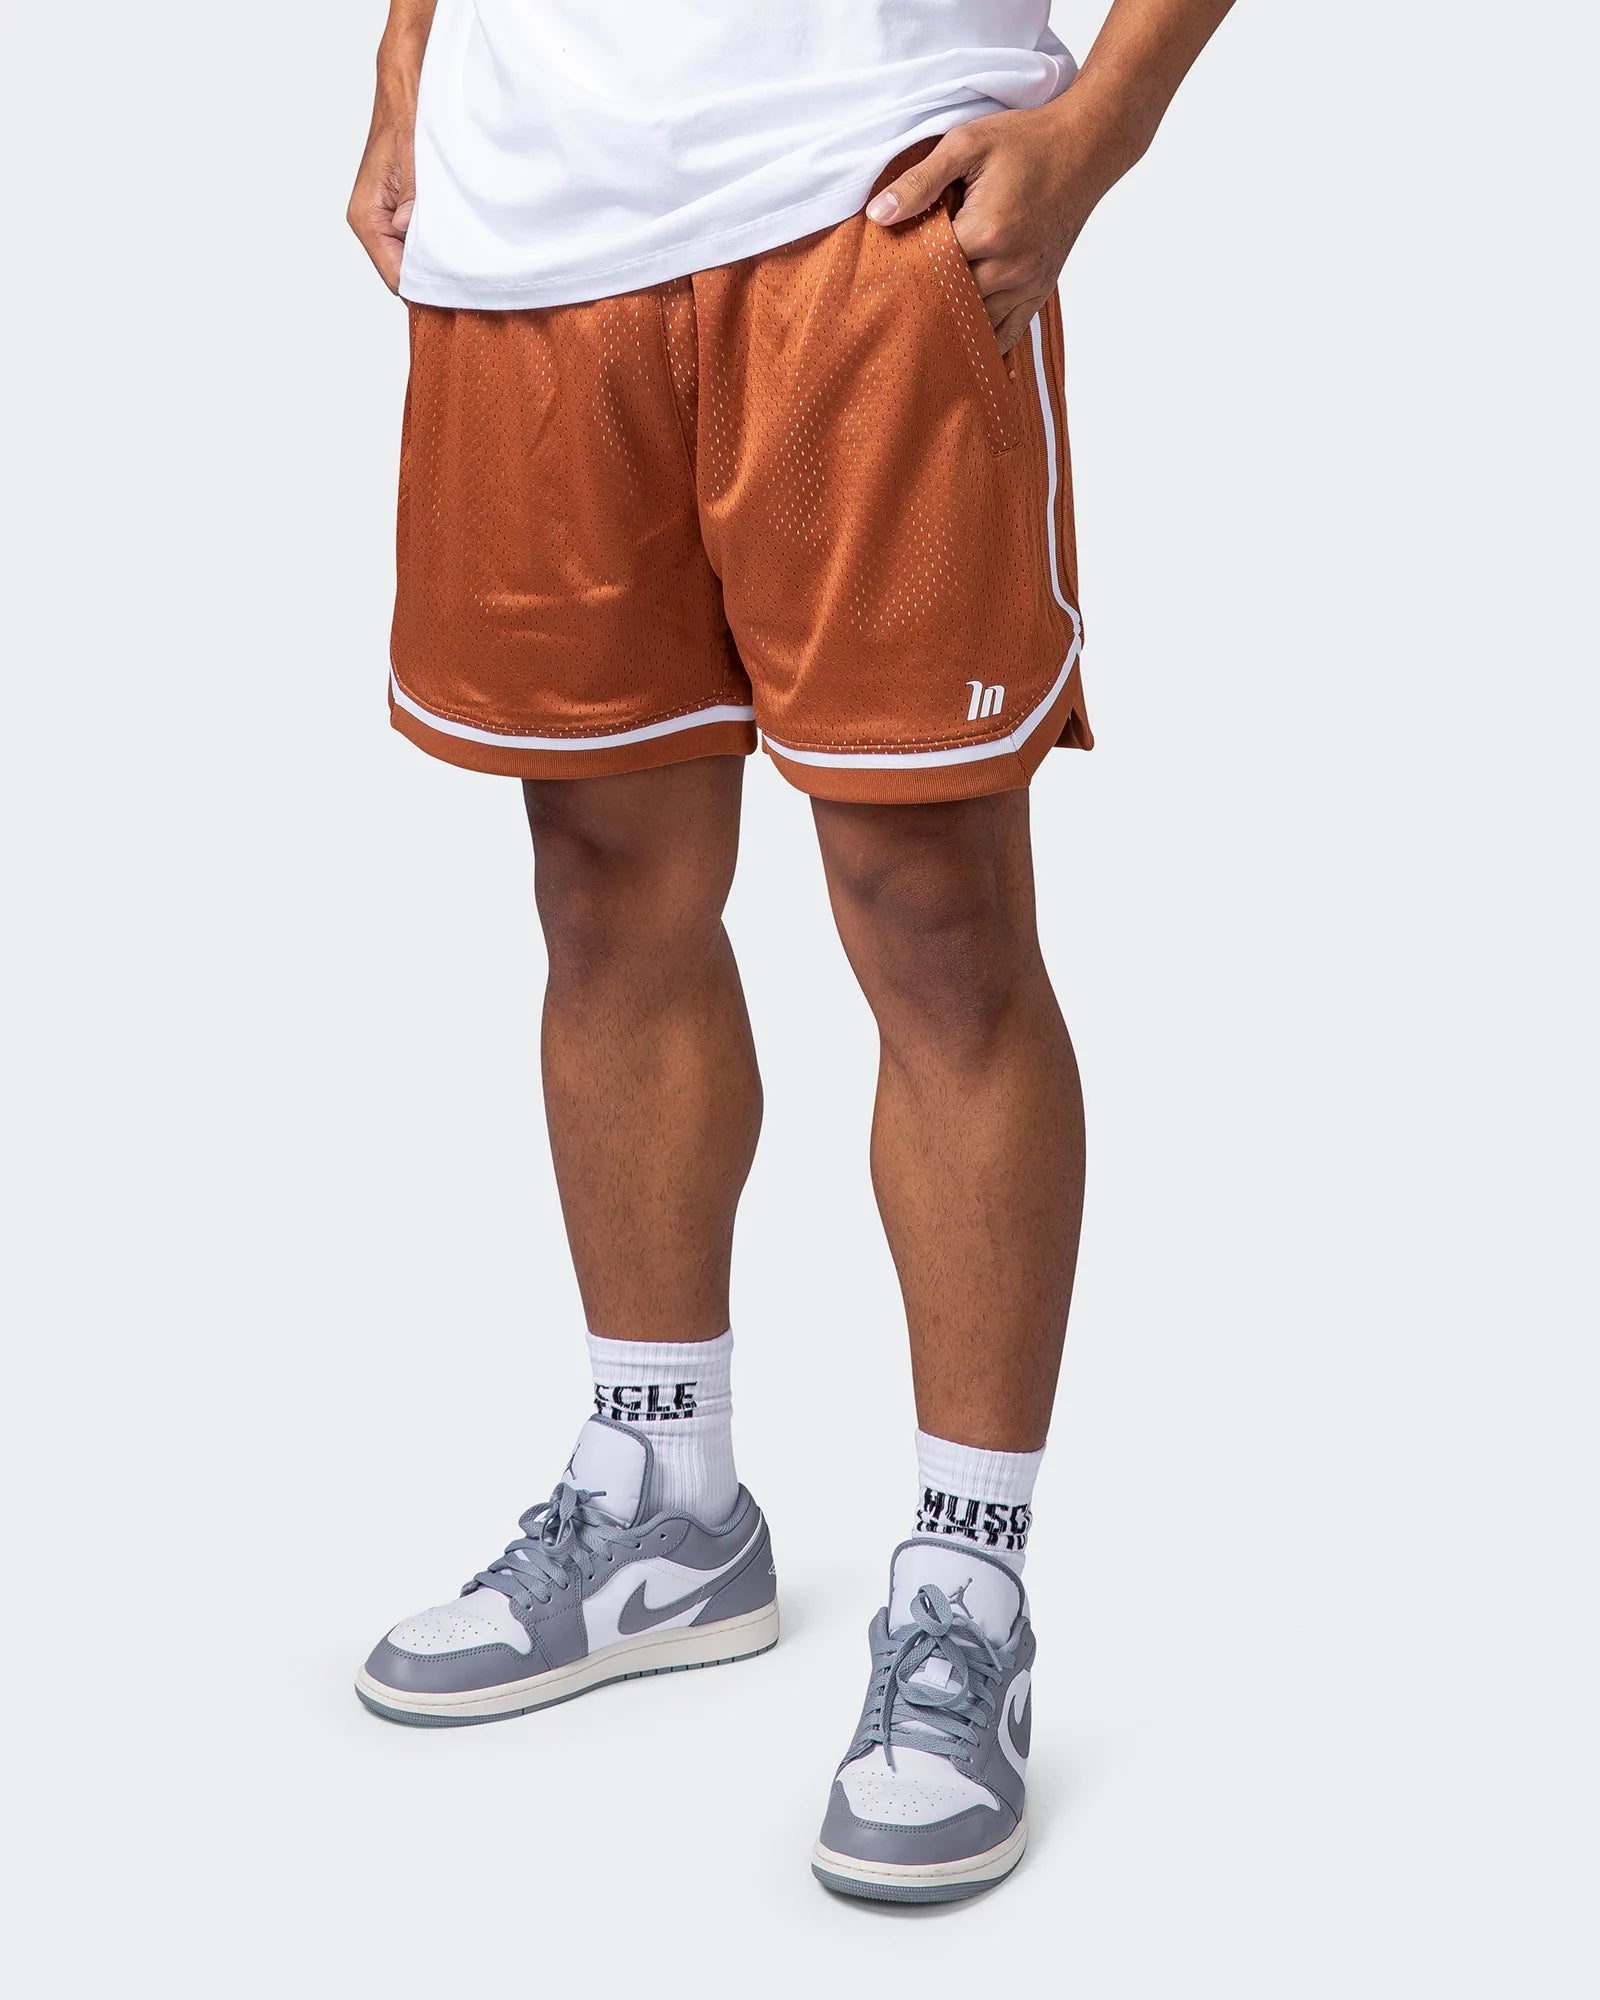 musclenation Shorts 5" Basketball Shorts - Sandstone